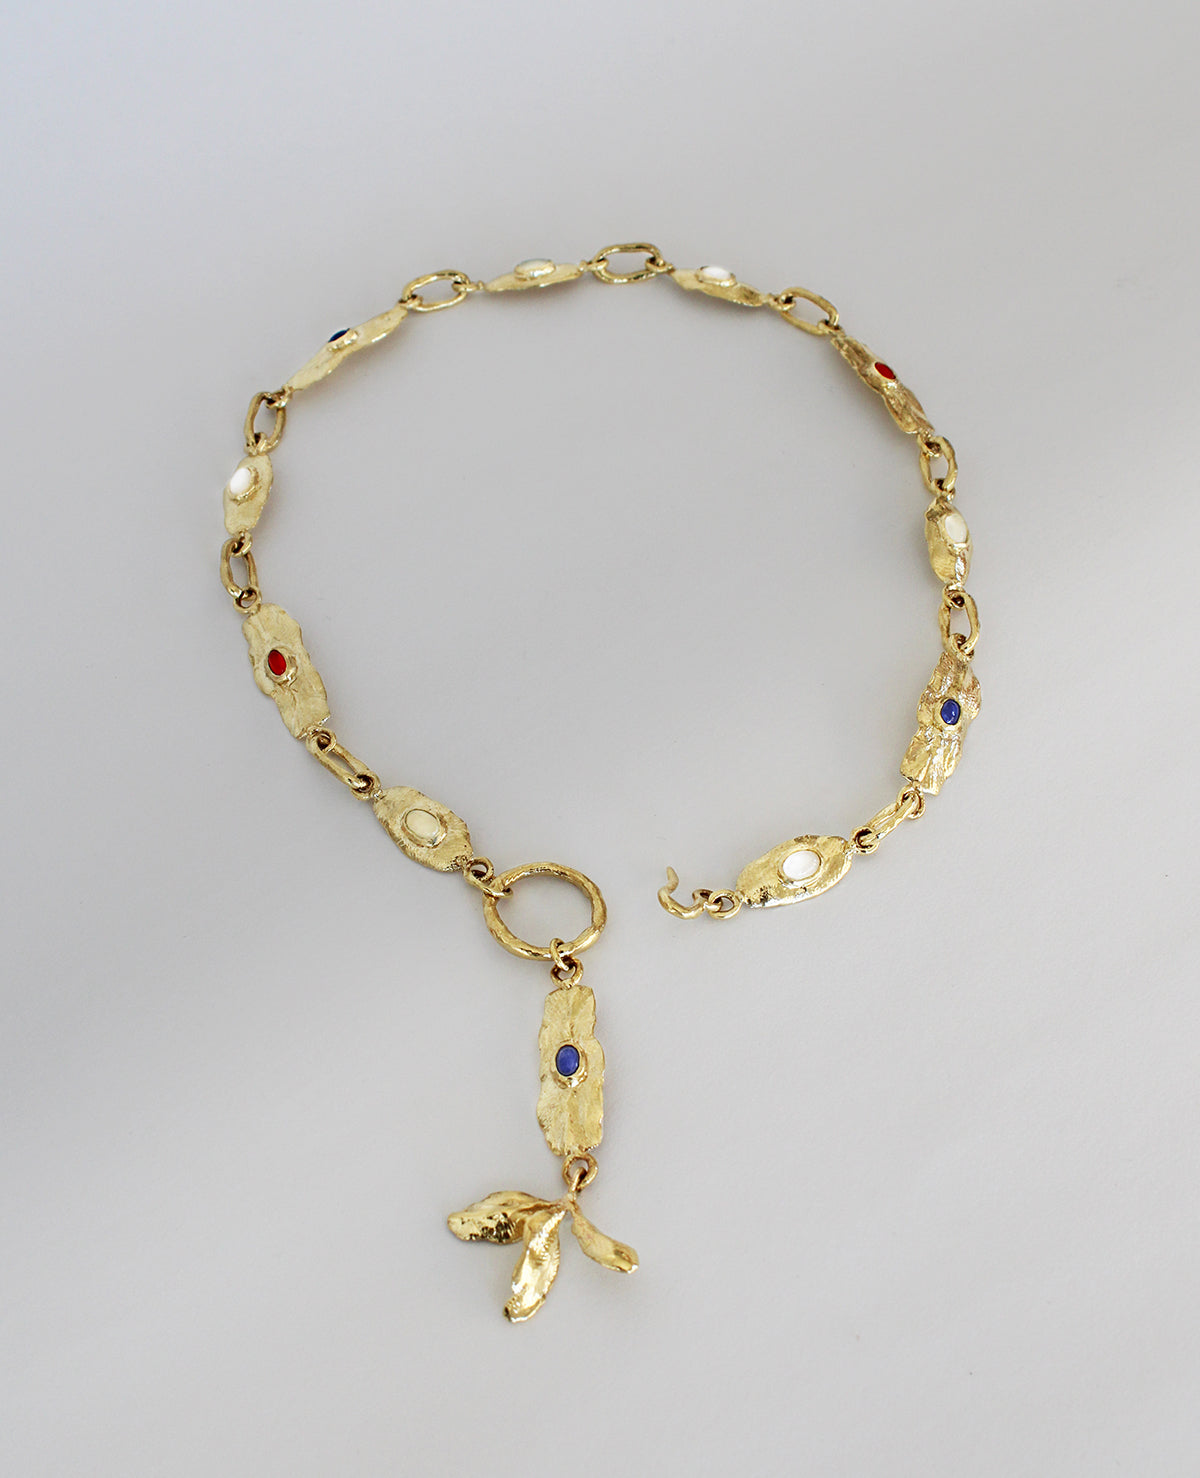 OXALIS ARMOR // necklace - ORA-C jewelry - handmade jewelry by Montreal based independent designer Caroline Pham